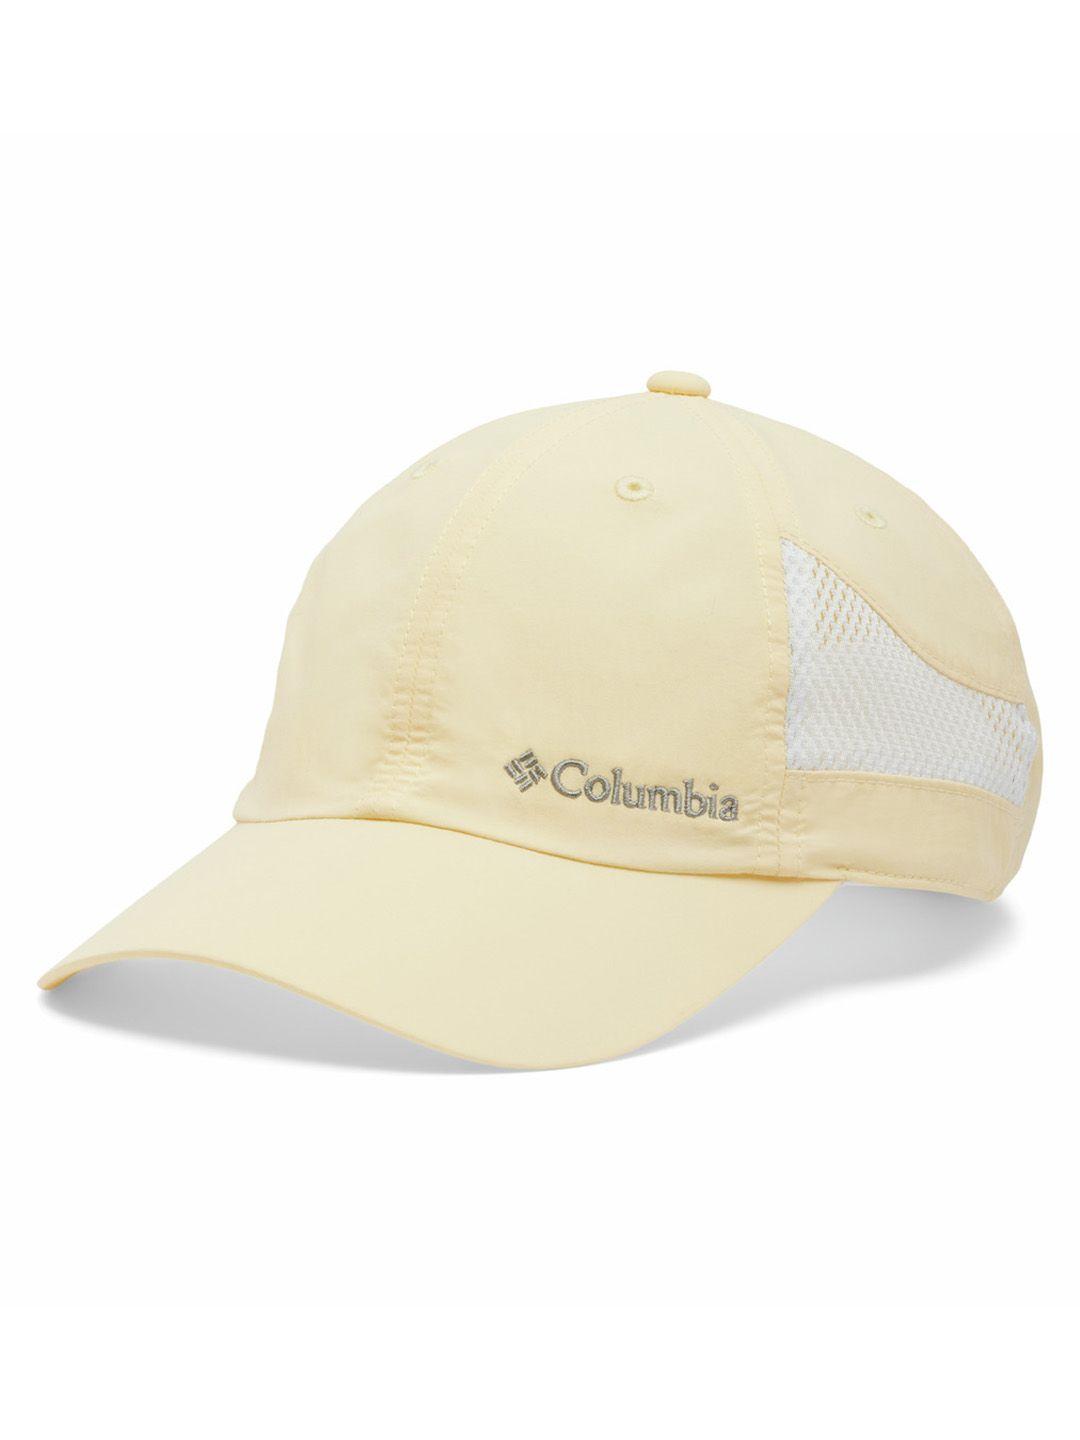 columbia unisex tech shade hat